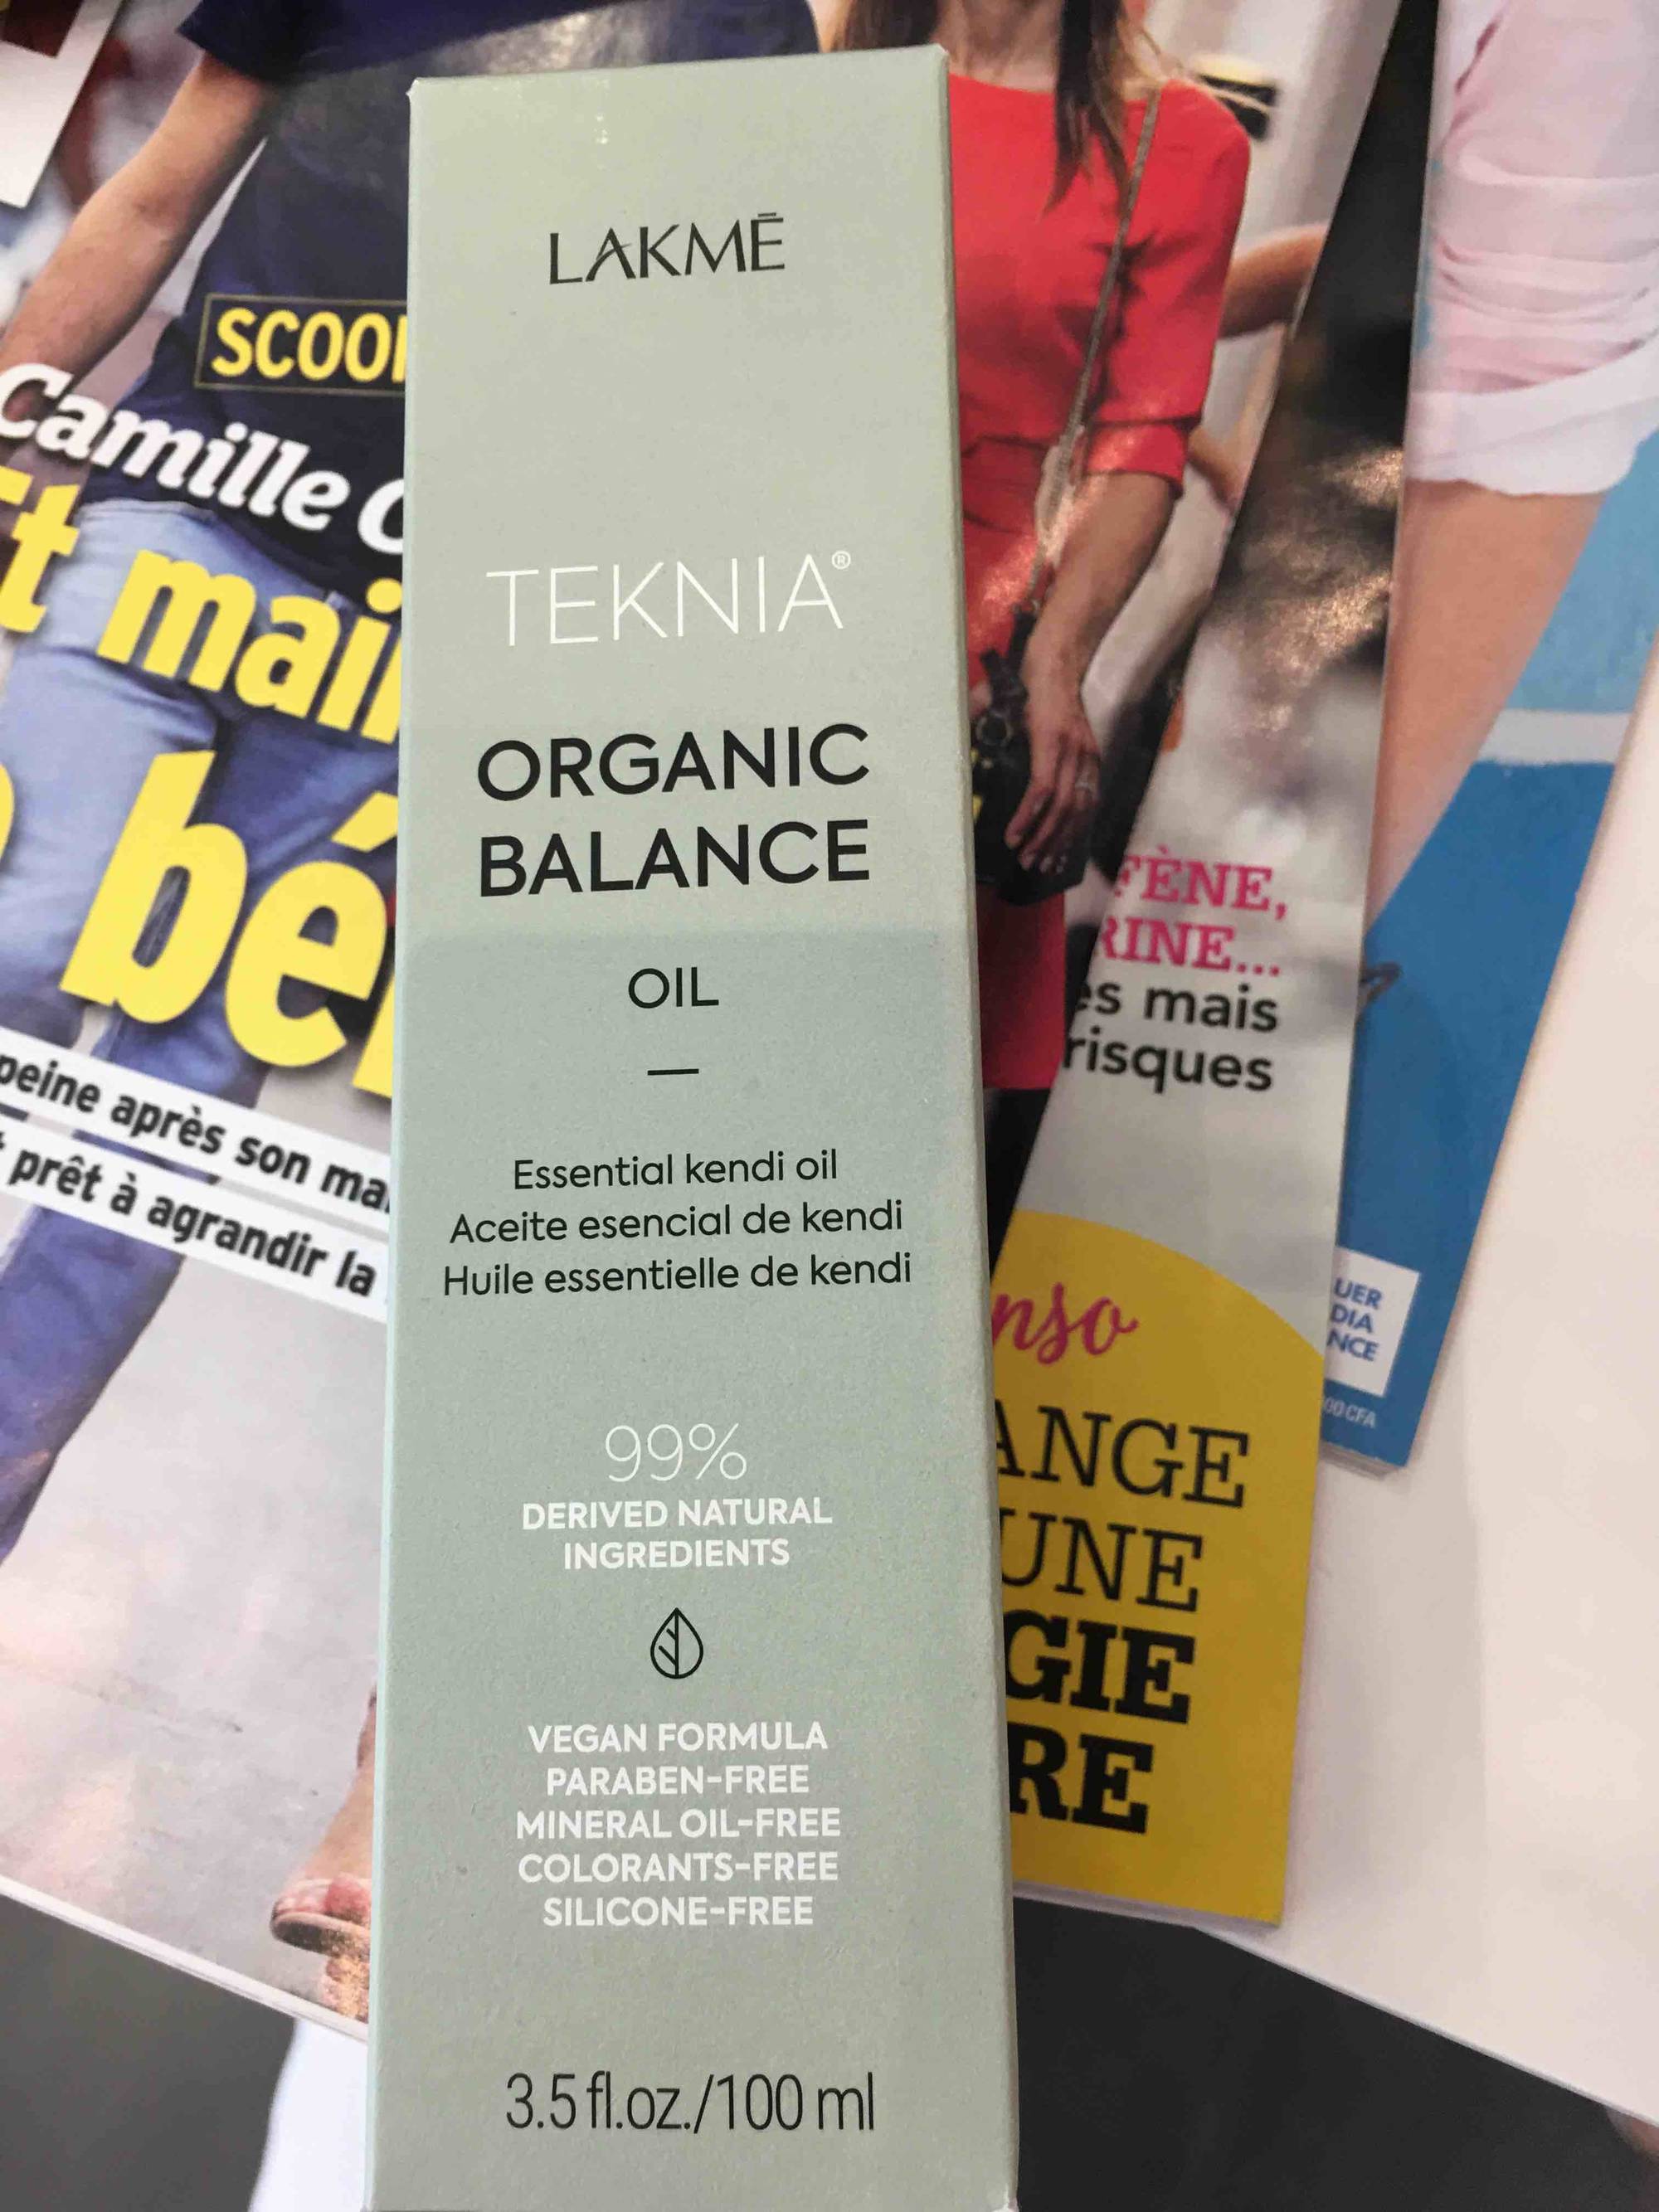 LAKME - Teknia - Organic balance oil